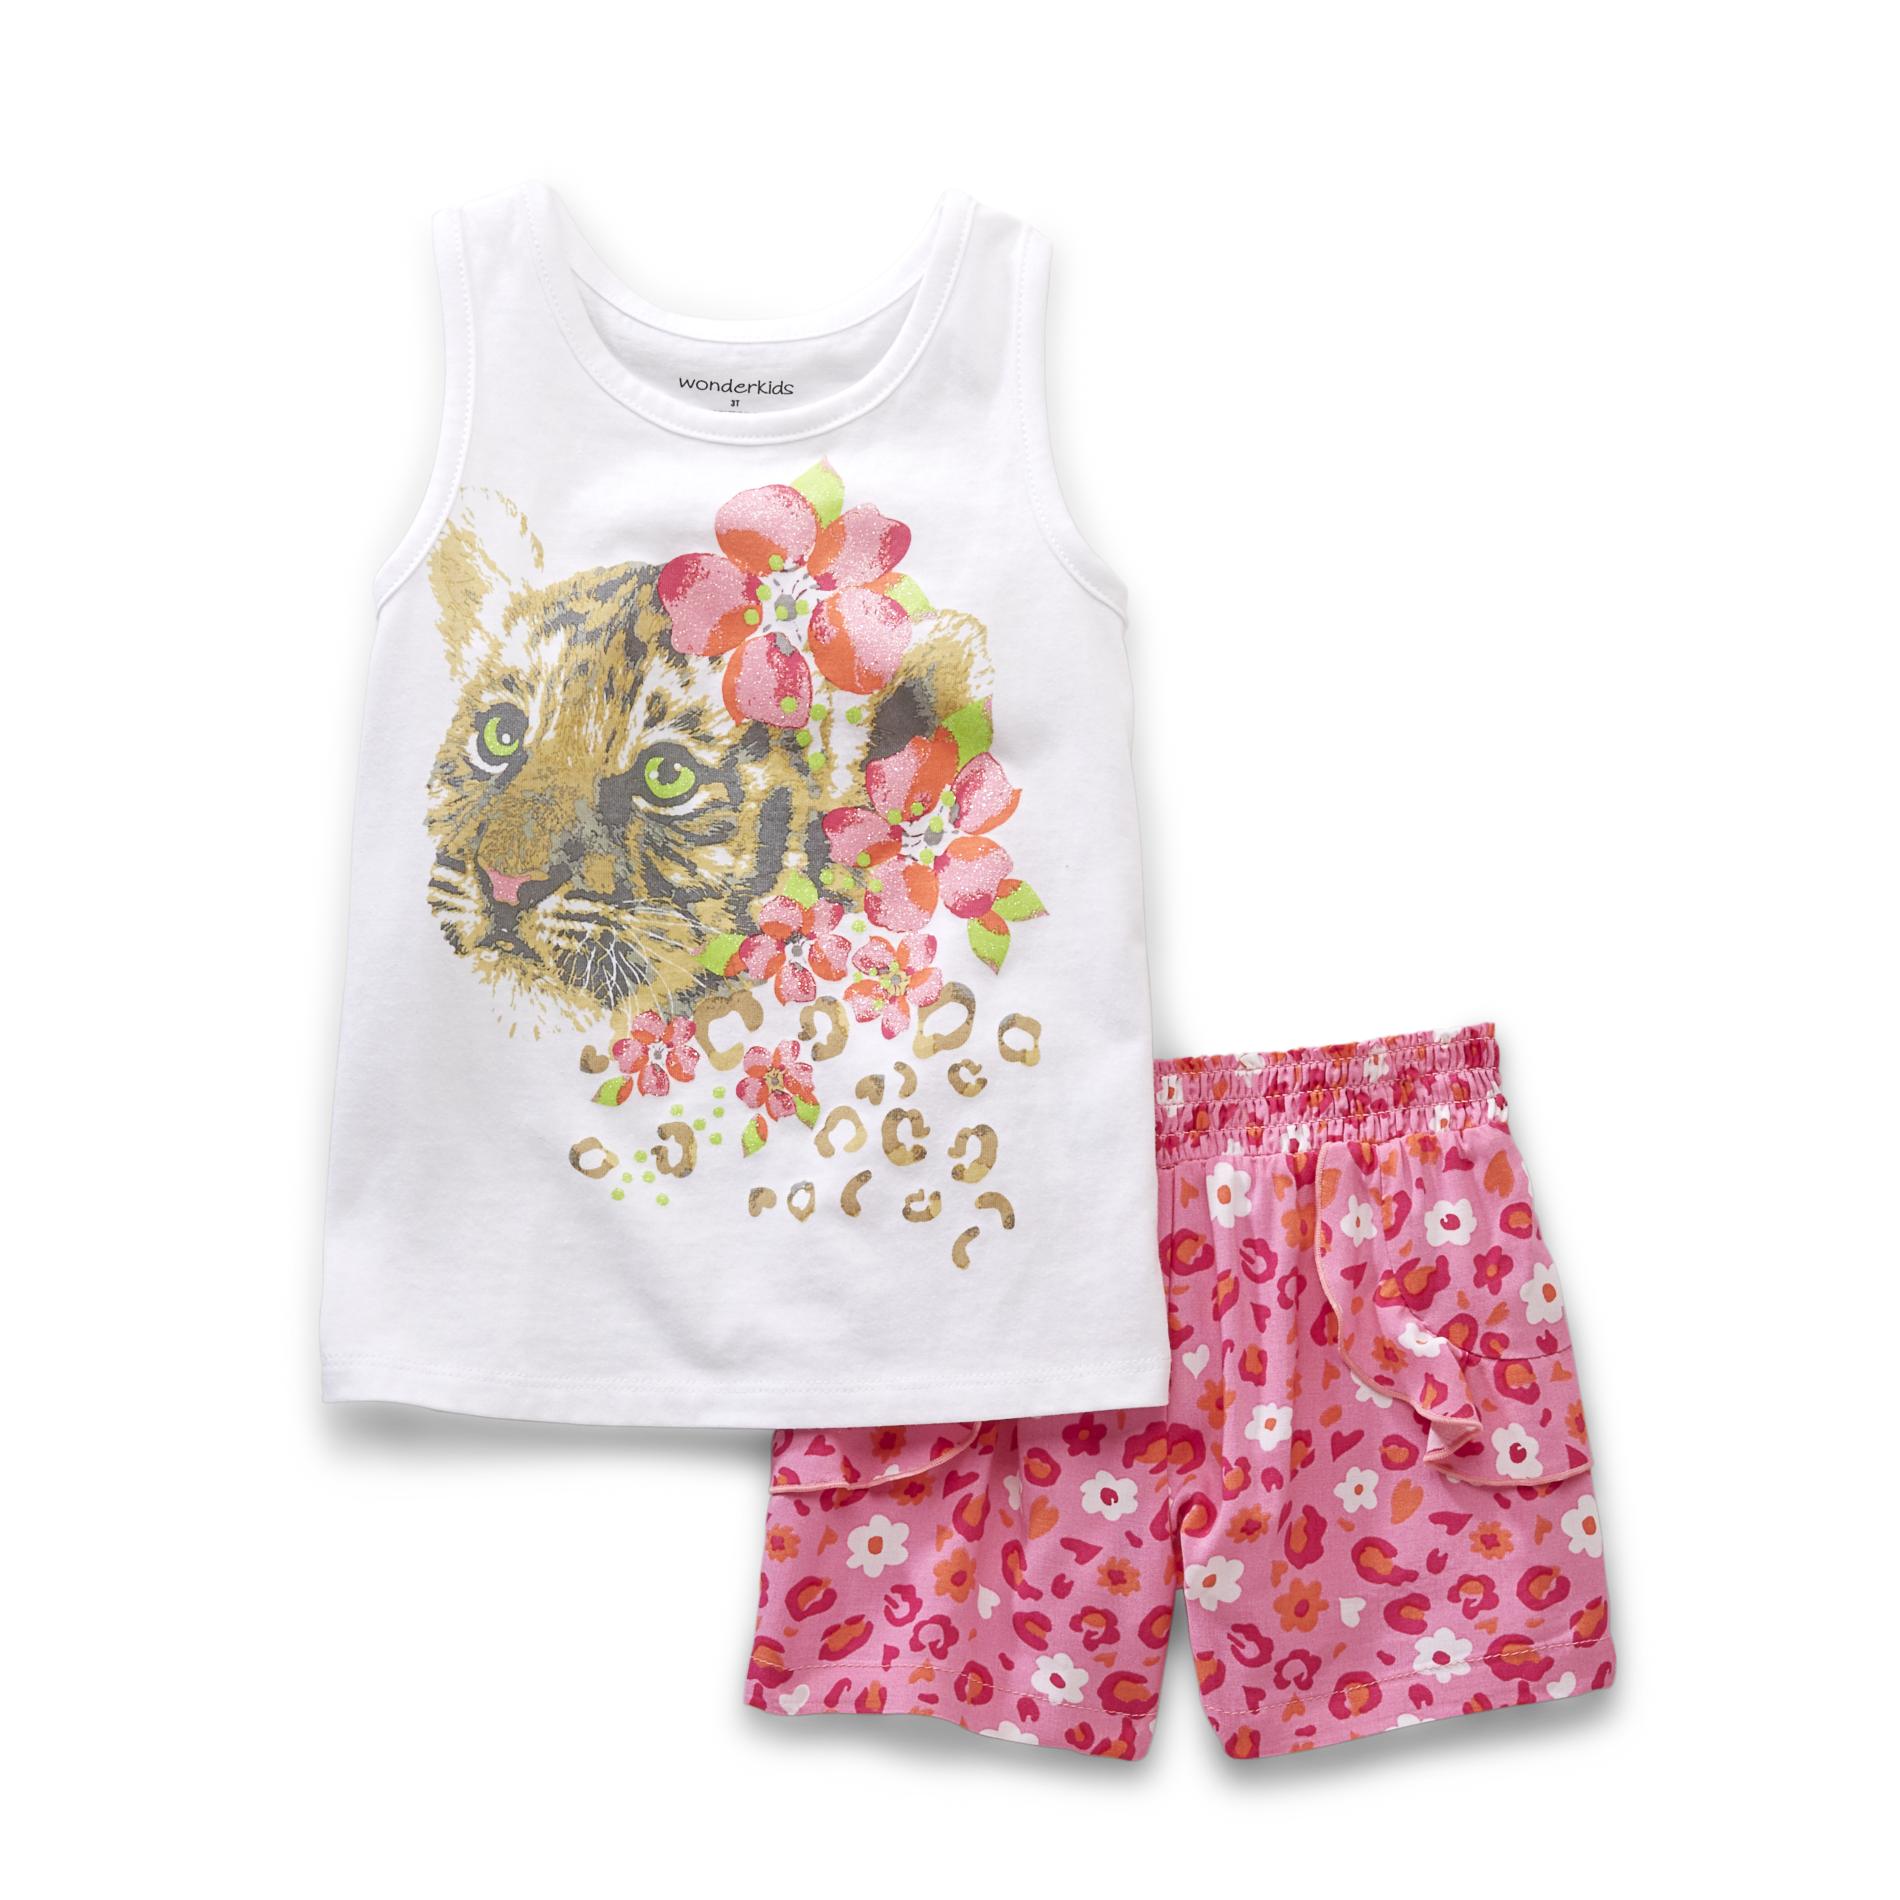 WonderKids Toddler Girl's Tank Top & Shorts - Leopard Print